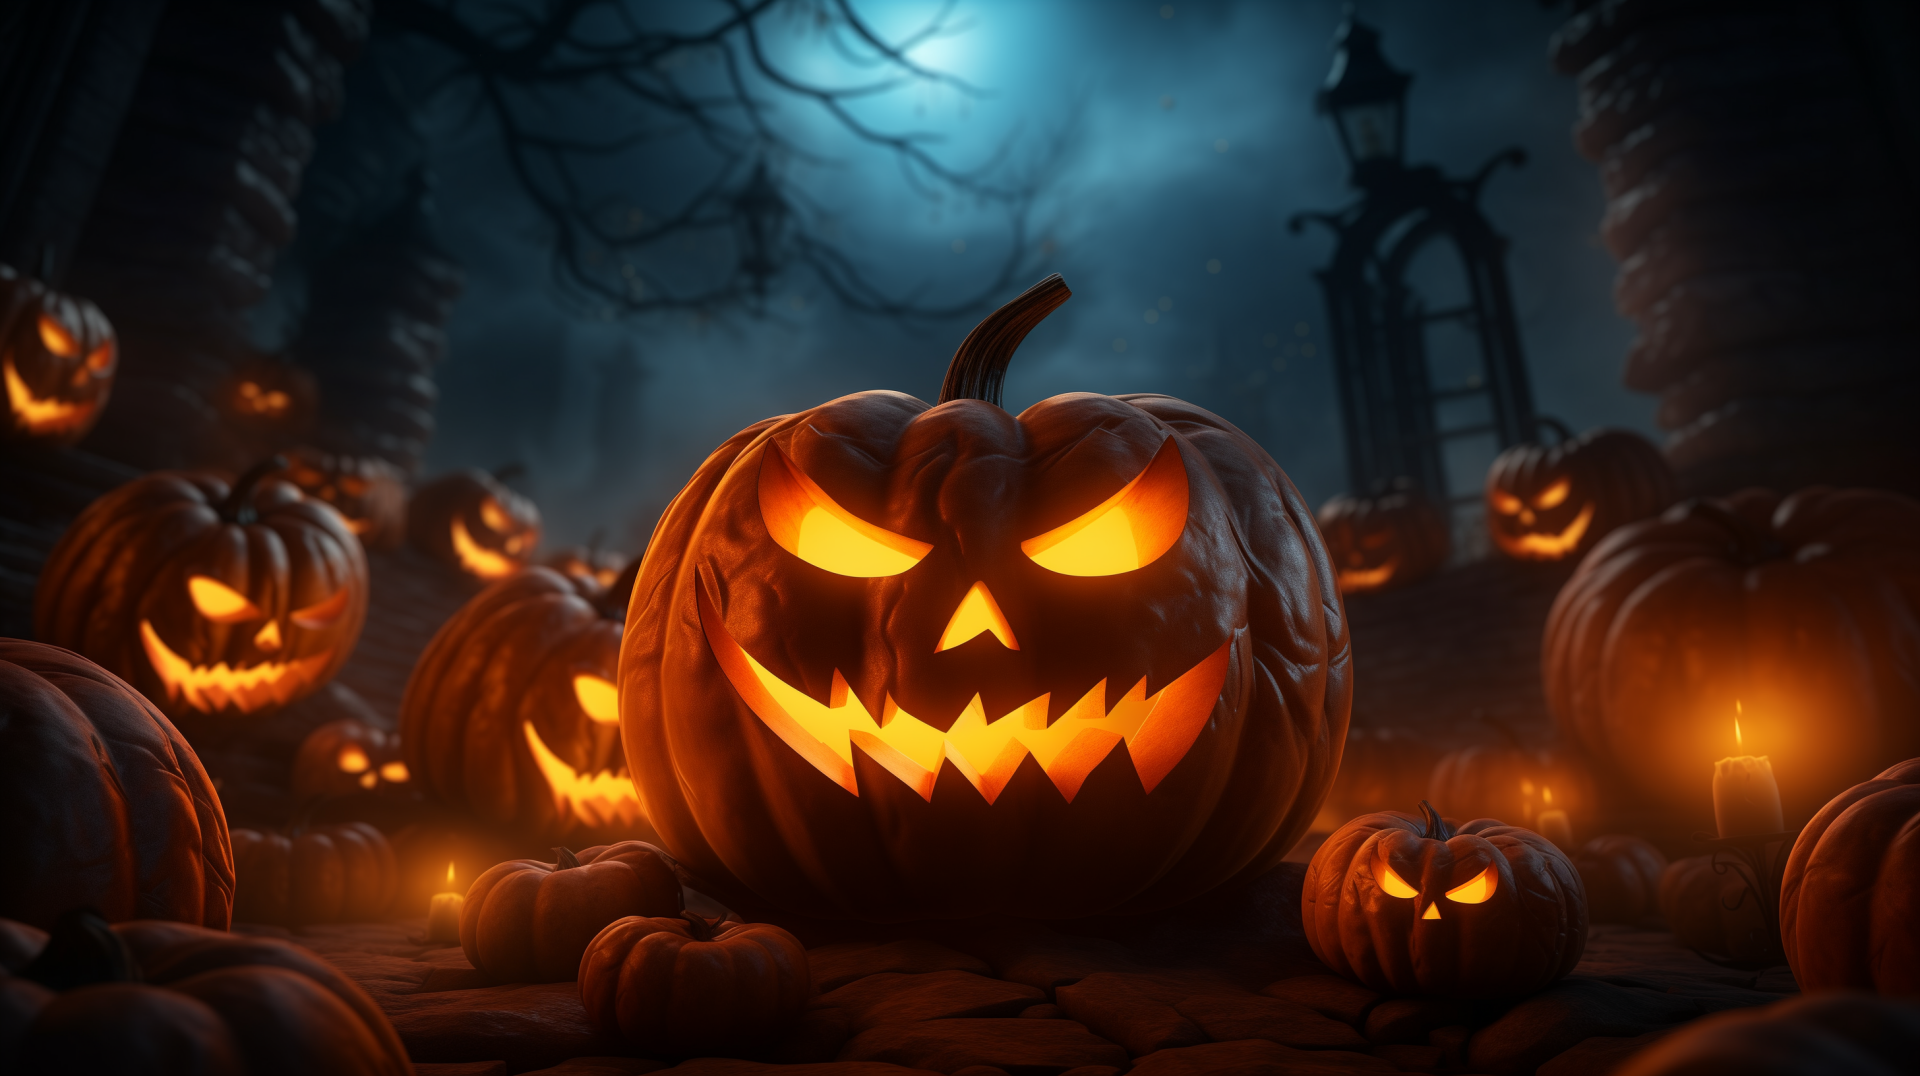 Halloween Pumpkinhead HD Wallpaper - Spooky Night Ambience by patrika